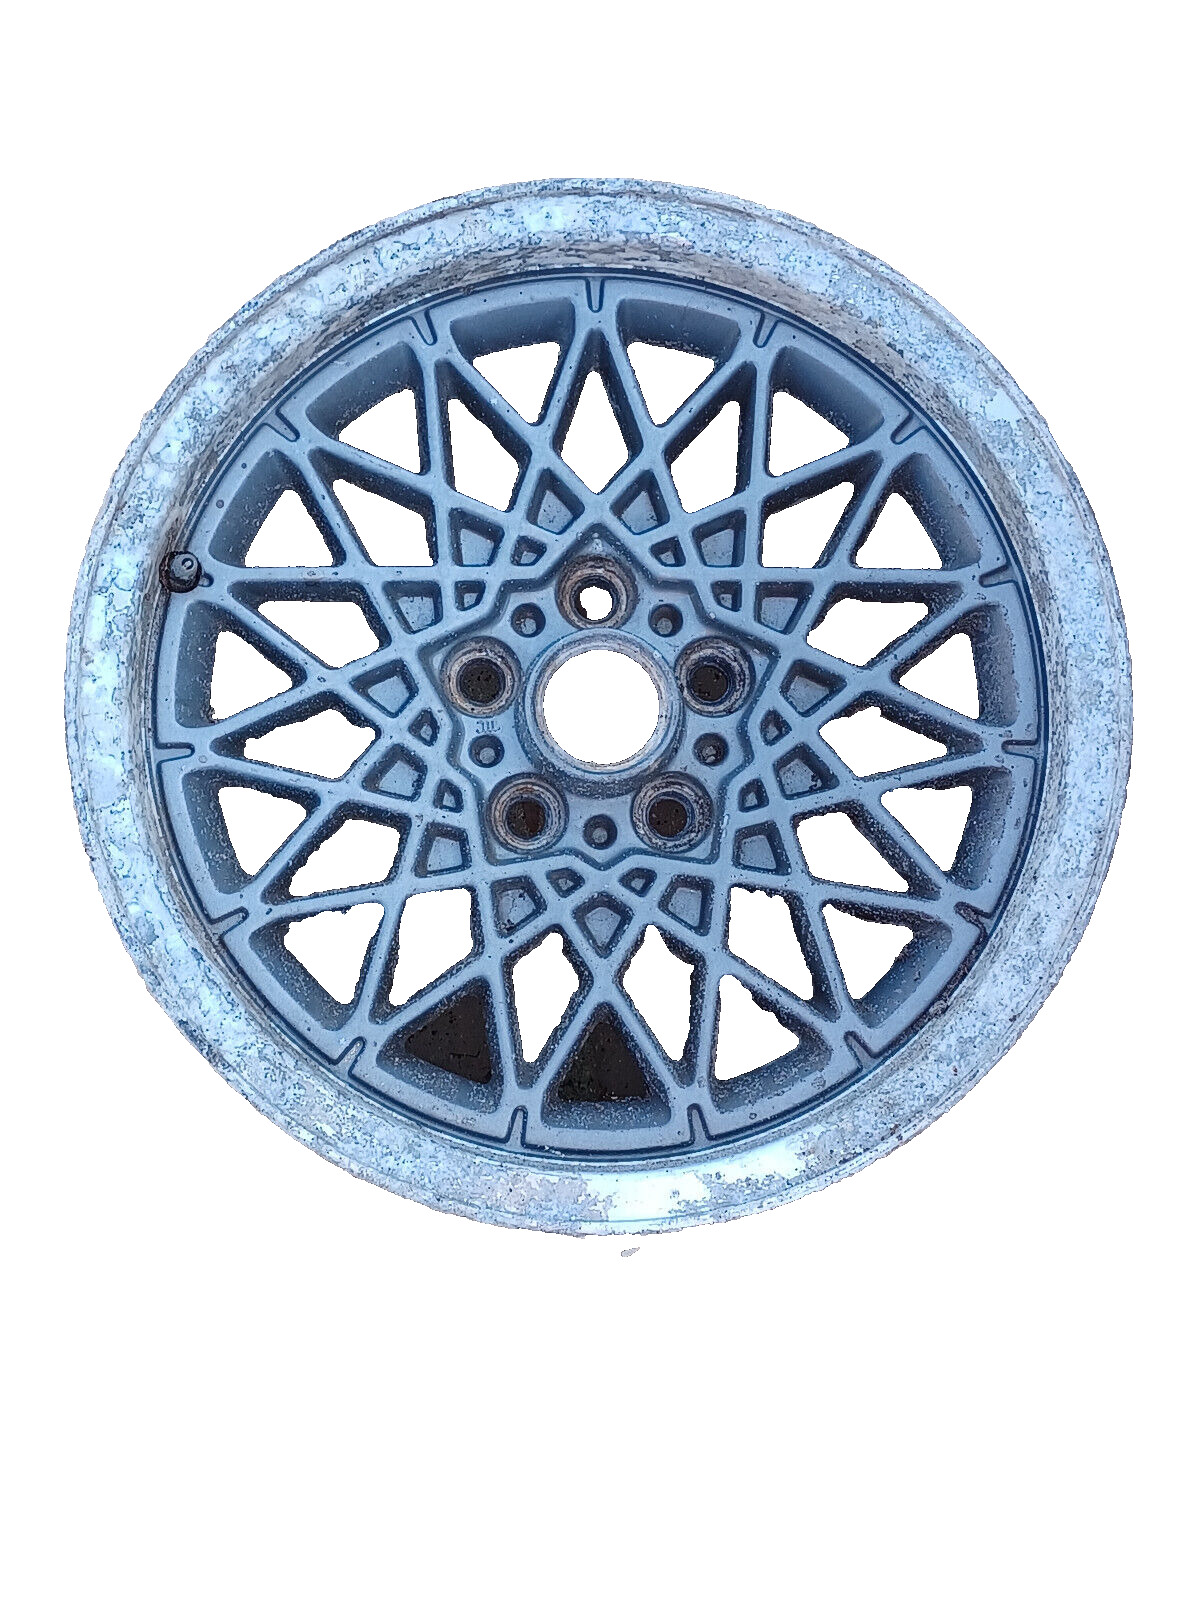 (1) Pontiac Fiero GT Snowflake Aluminum Wheel Rim 15x7 #40